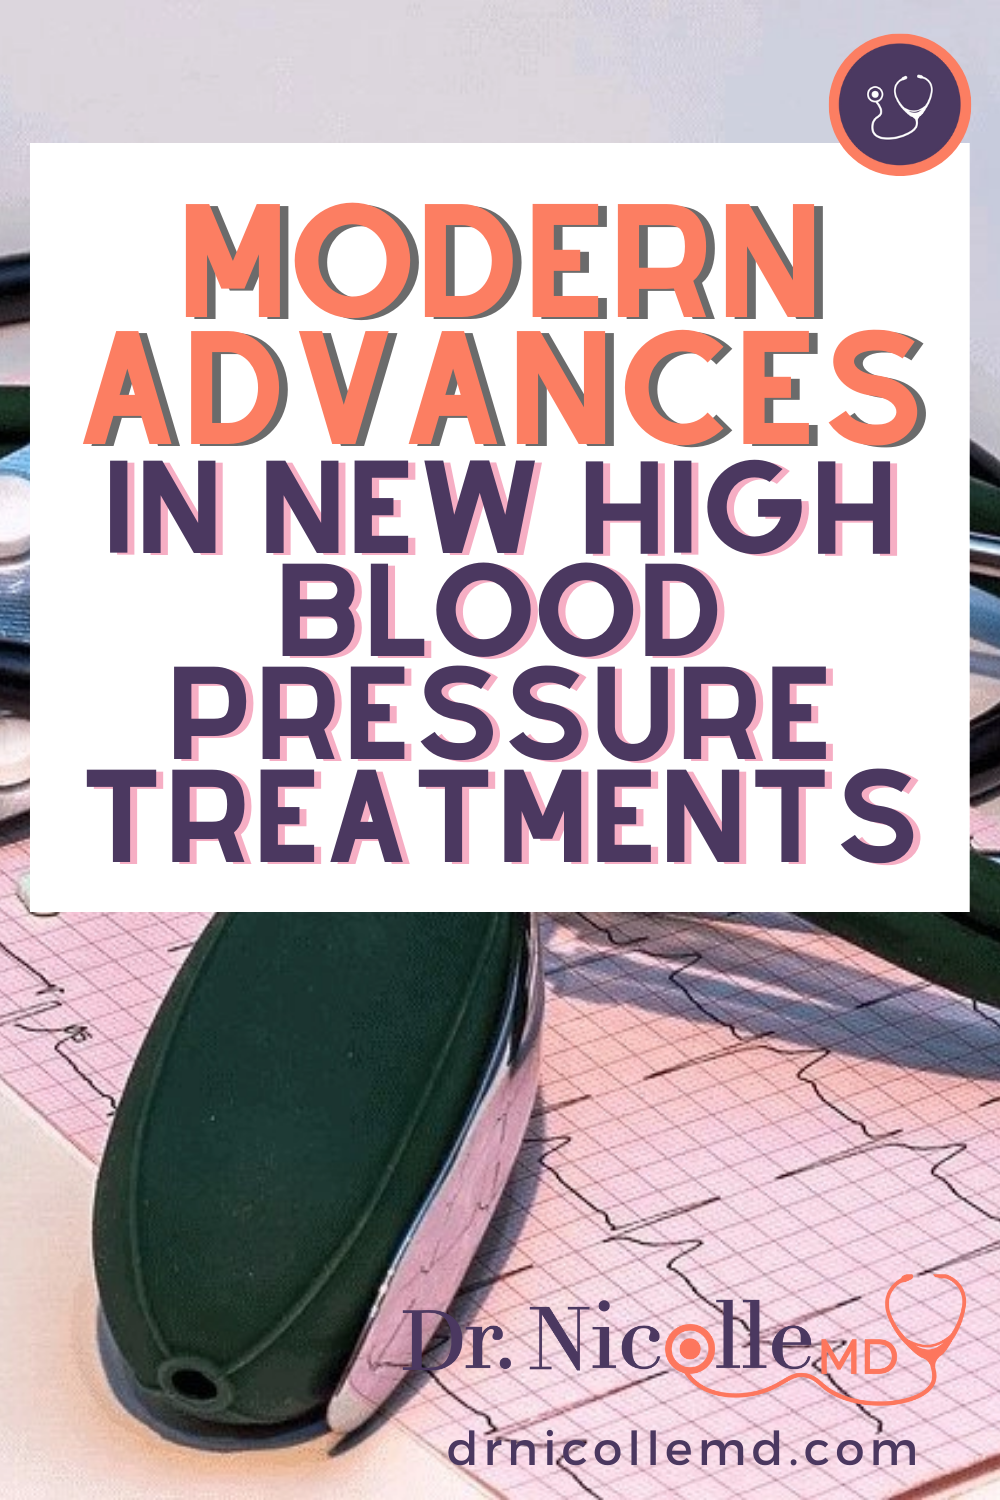 Modern Advances in New High Blood Pressure Treatments